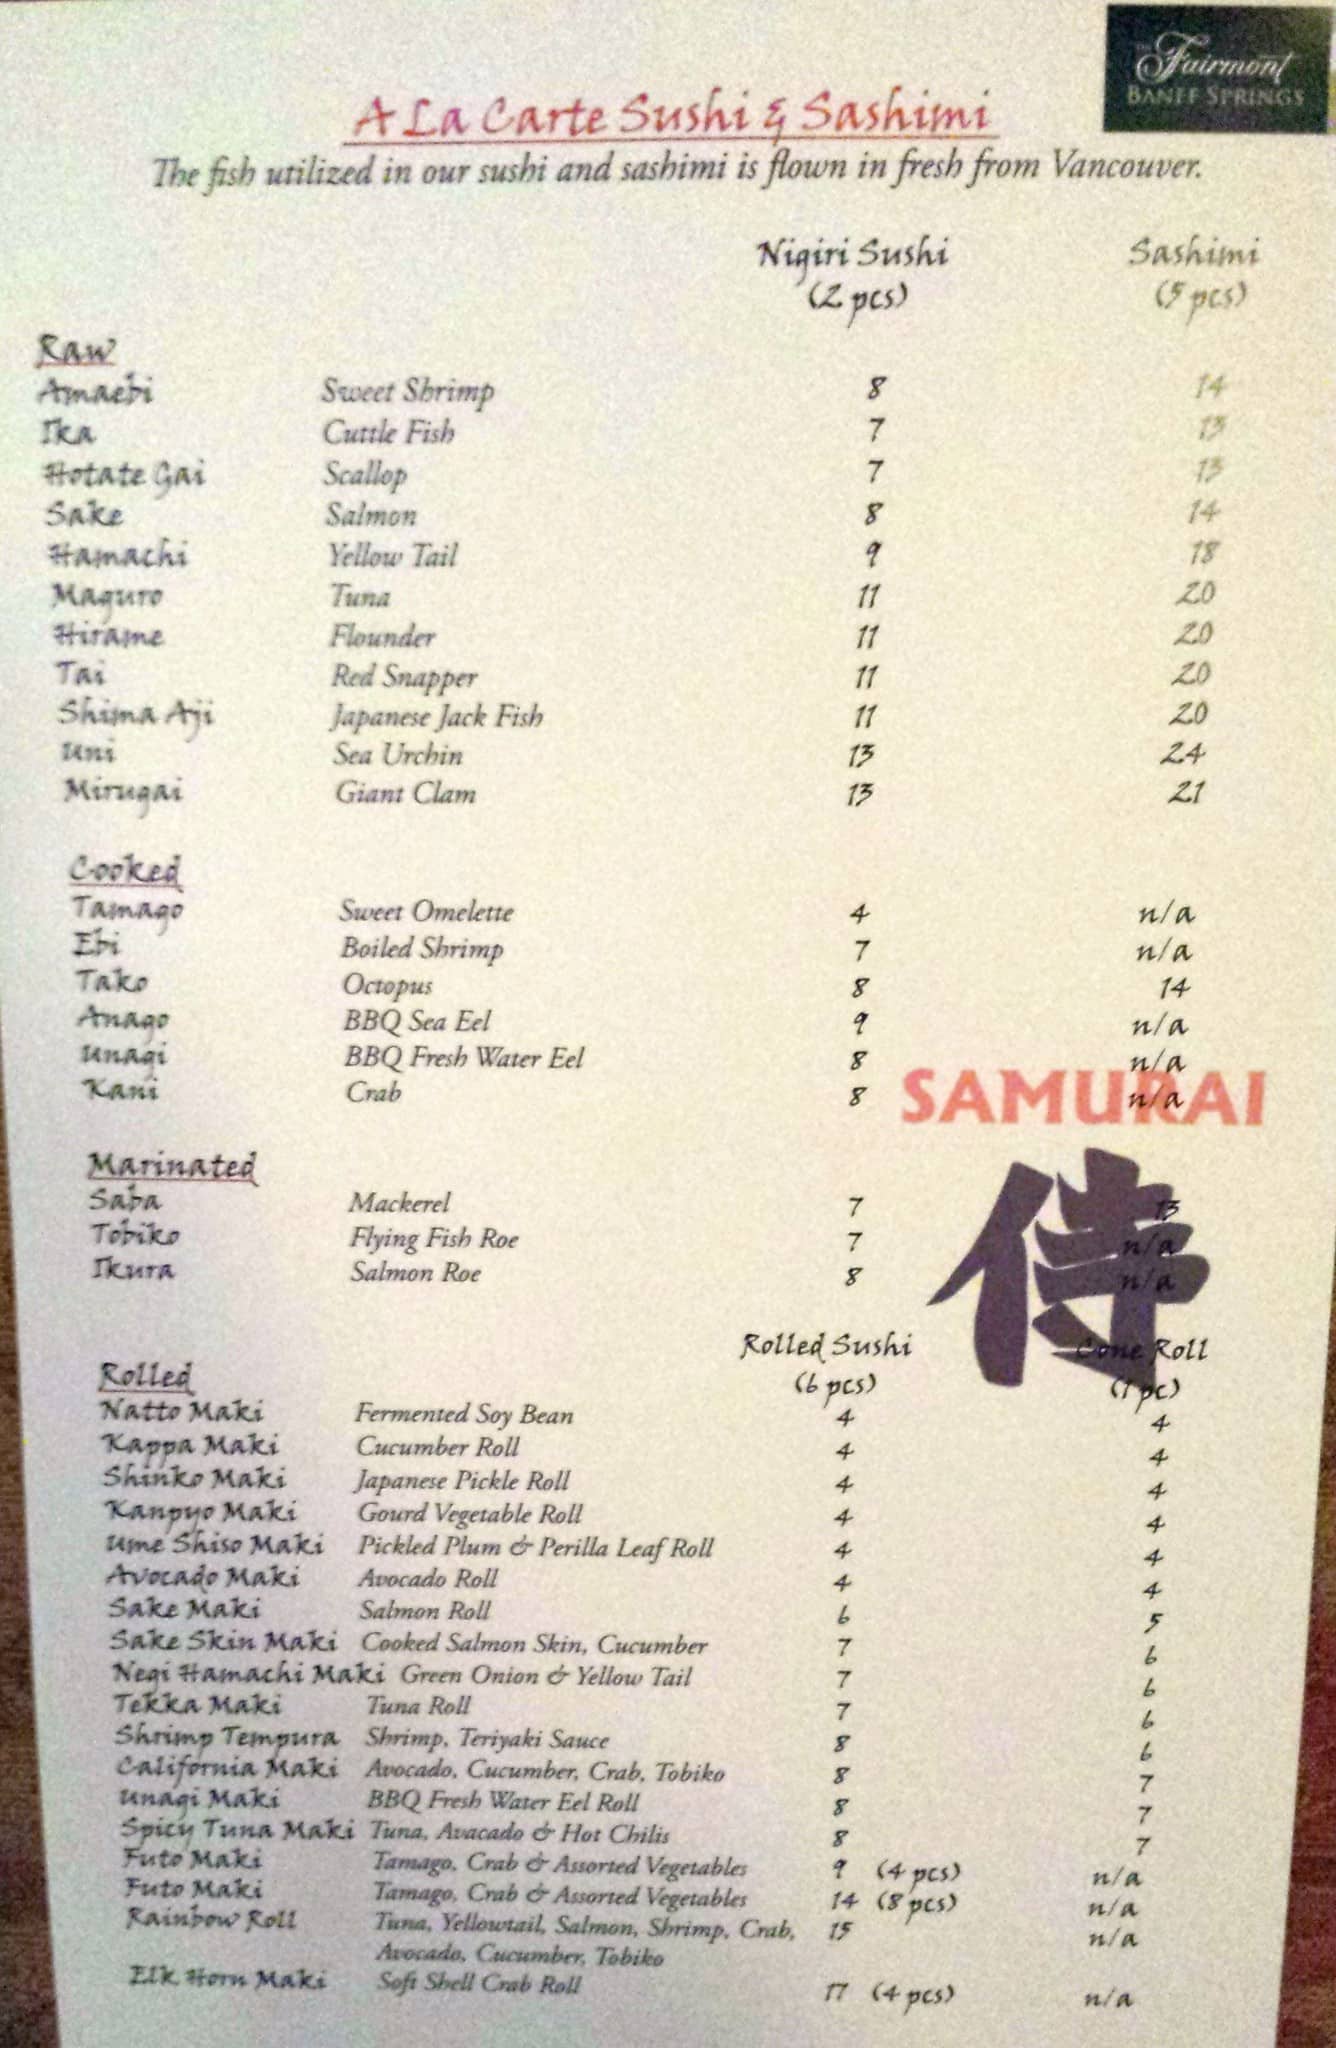 Samurai Sushi Bar and Restaurant menu